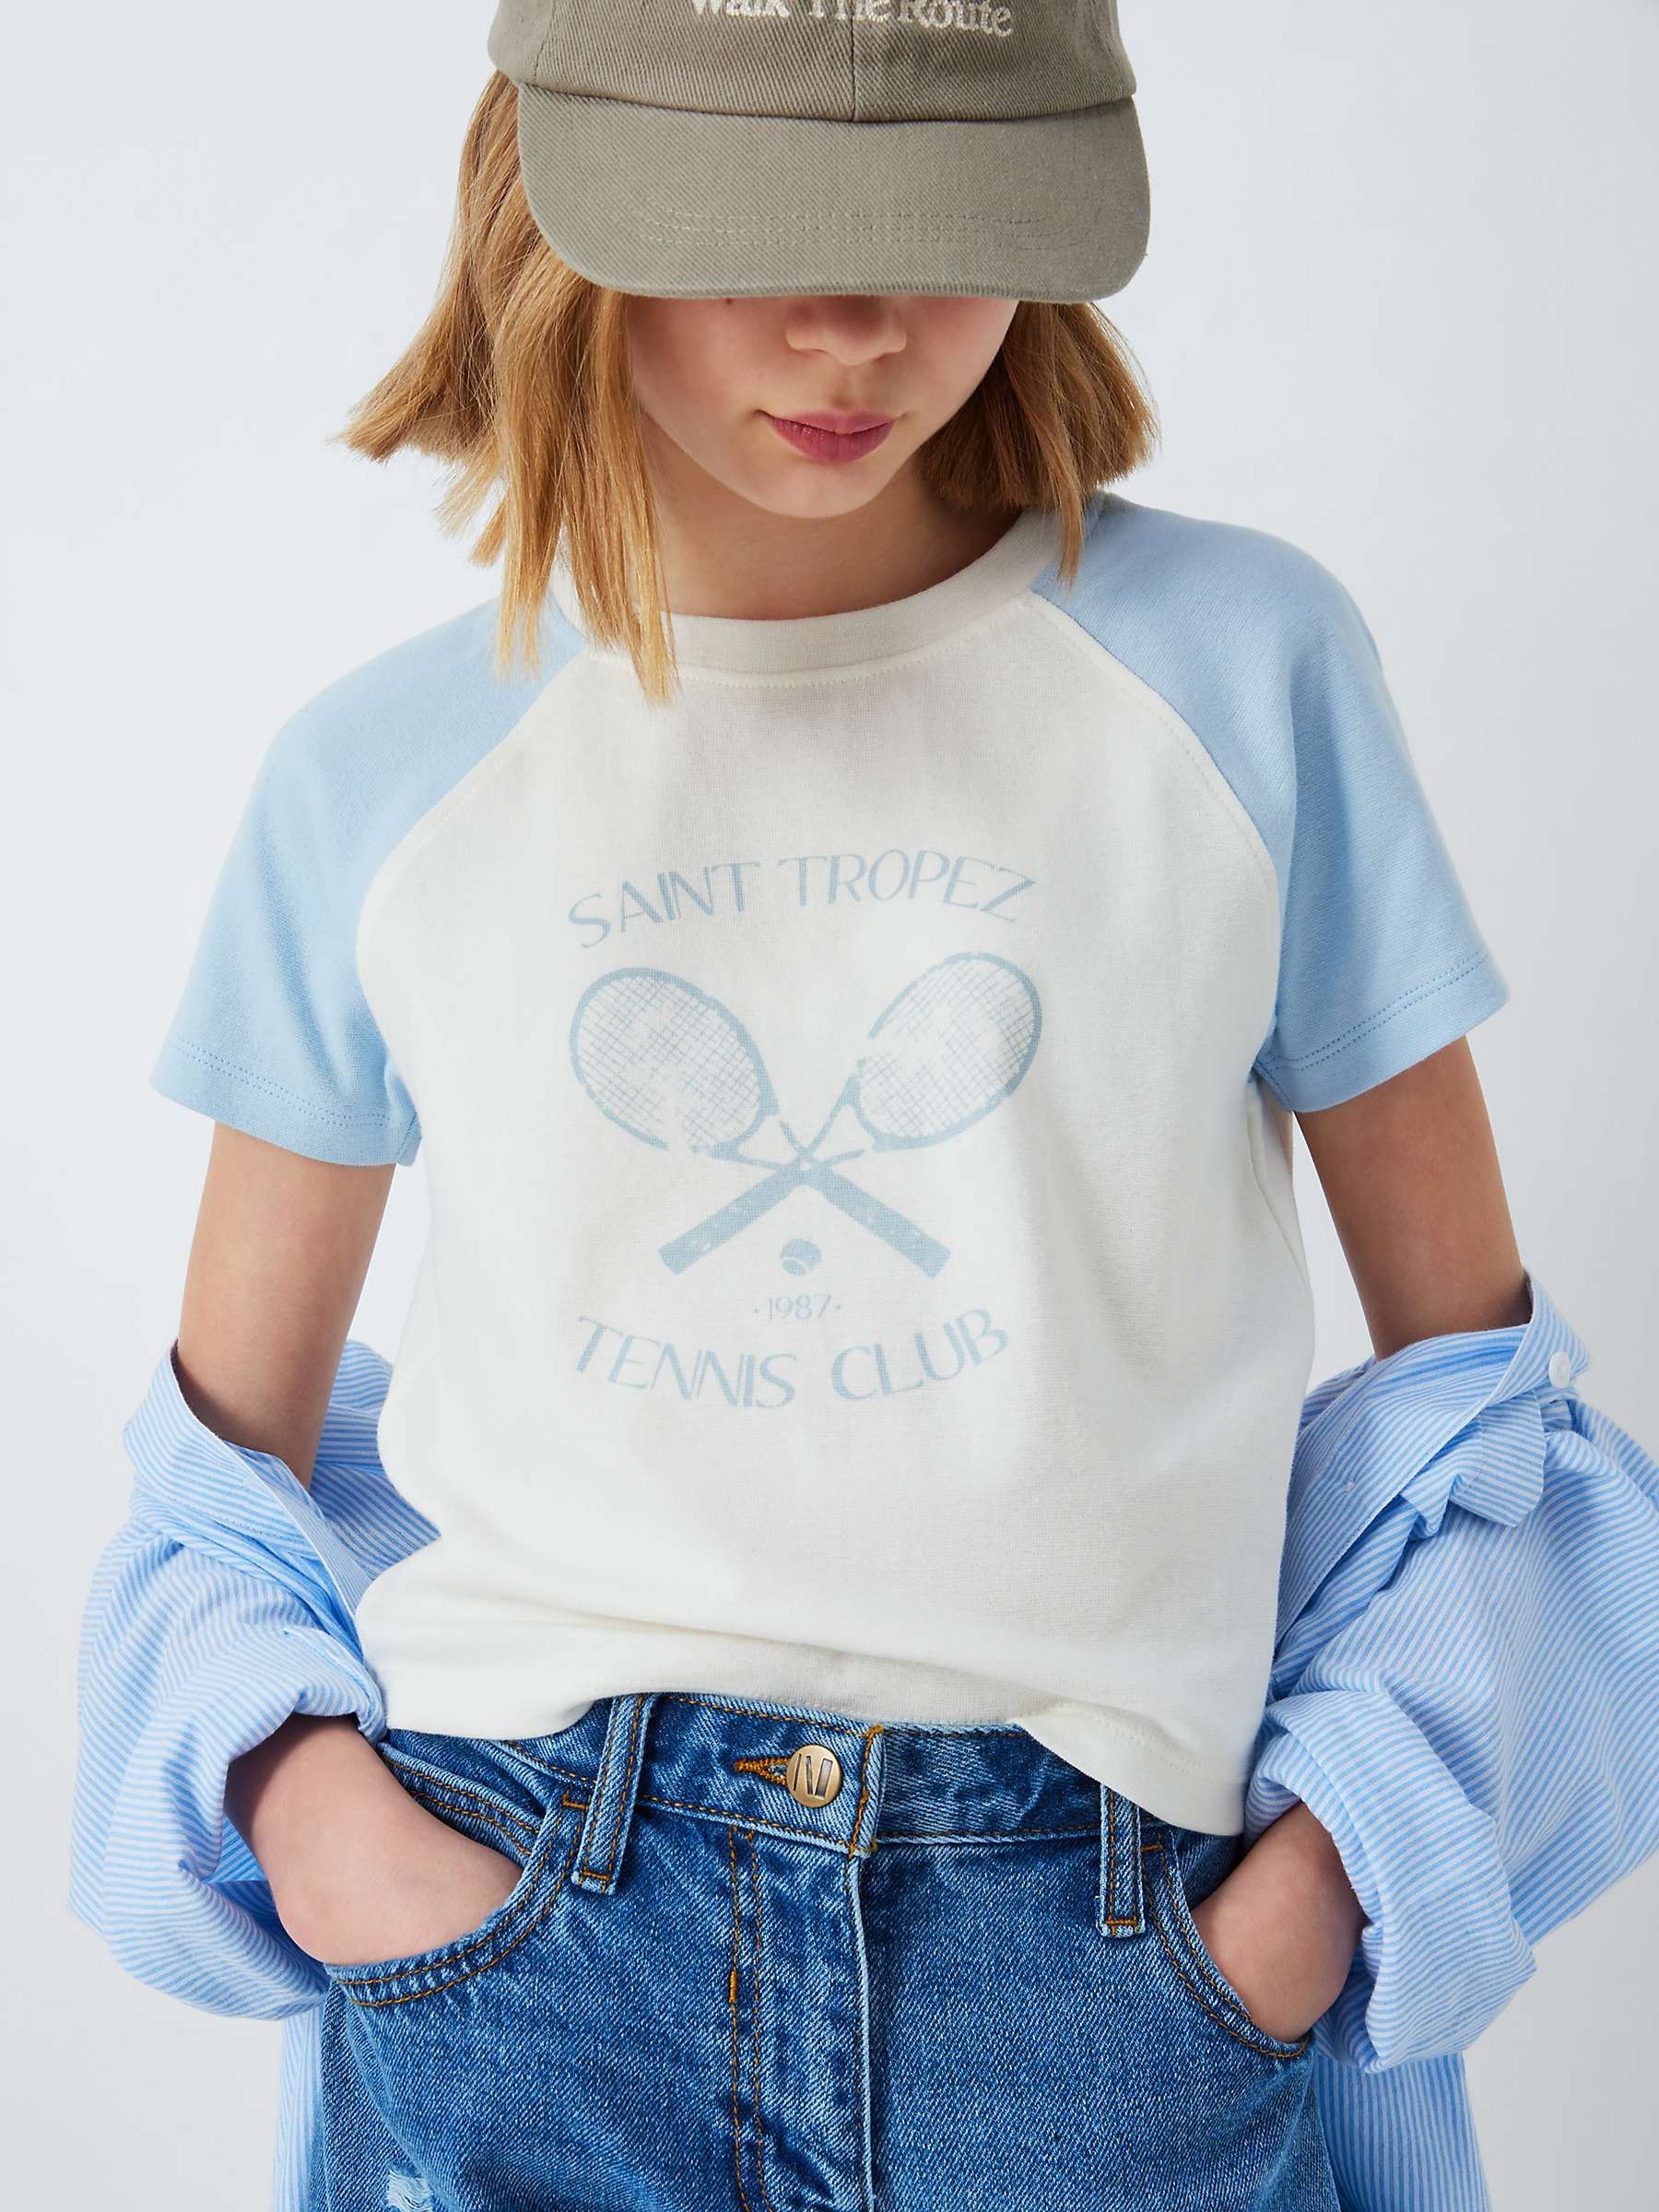 Buy John Lewis Kids' Saint Tropez Tennis Graphic T-Shirt, Snow White/Egret Online at johnlewis.com